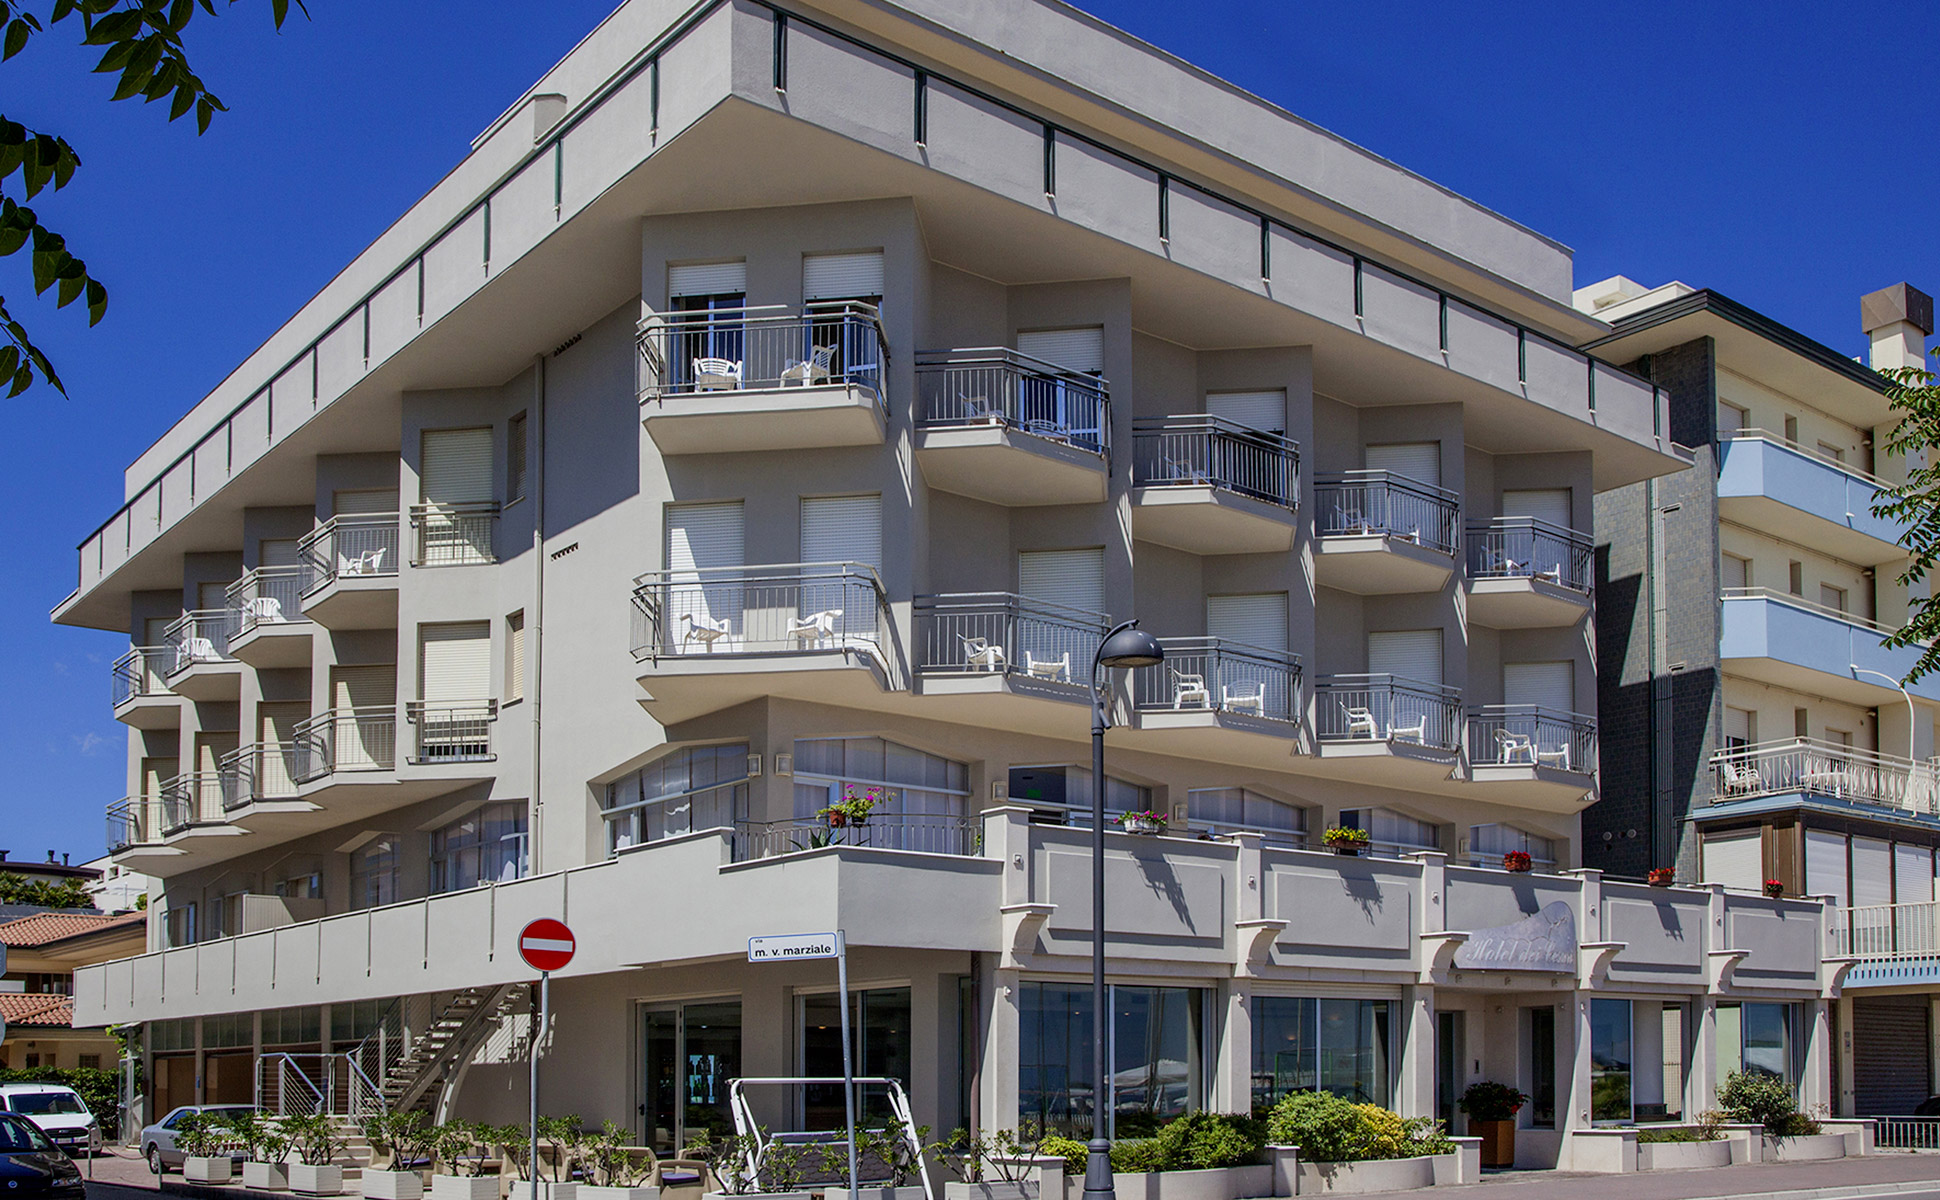 Hotel Dei Cesari - Igea Marina di Rimini